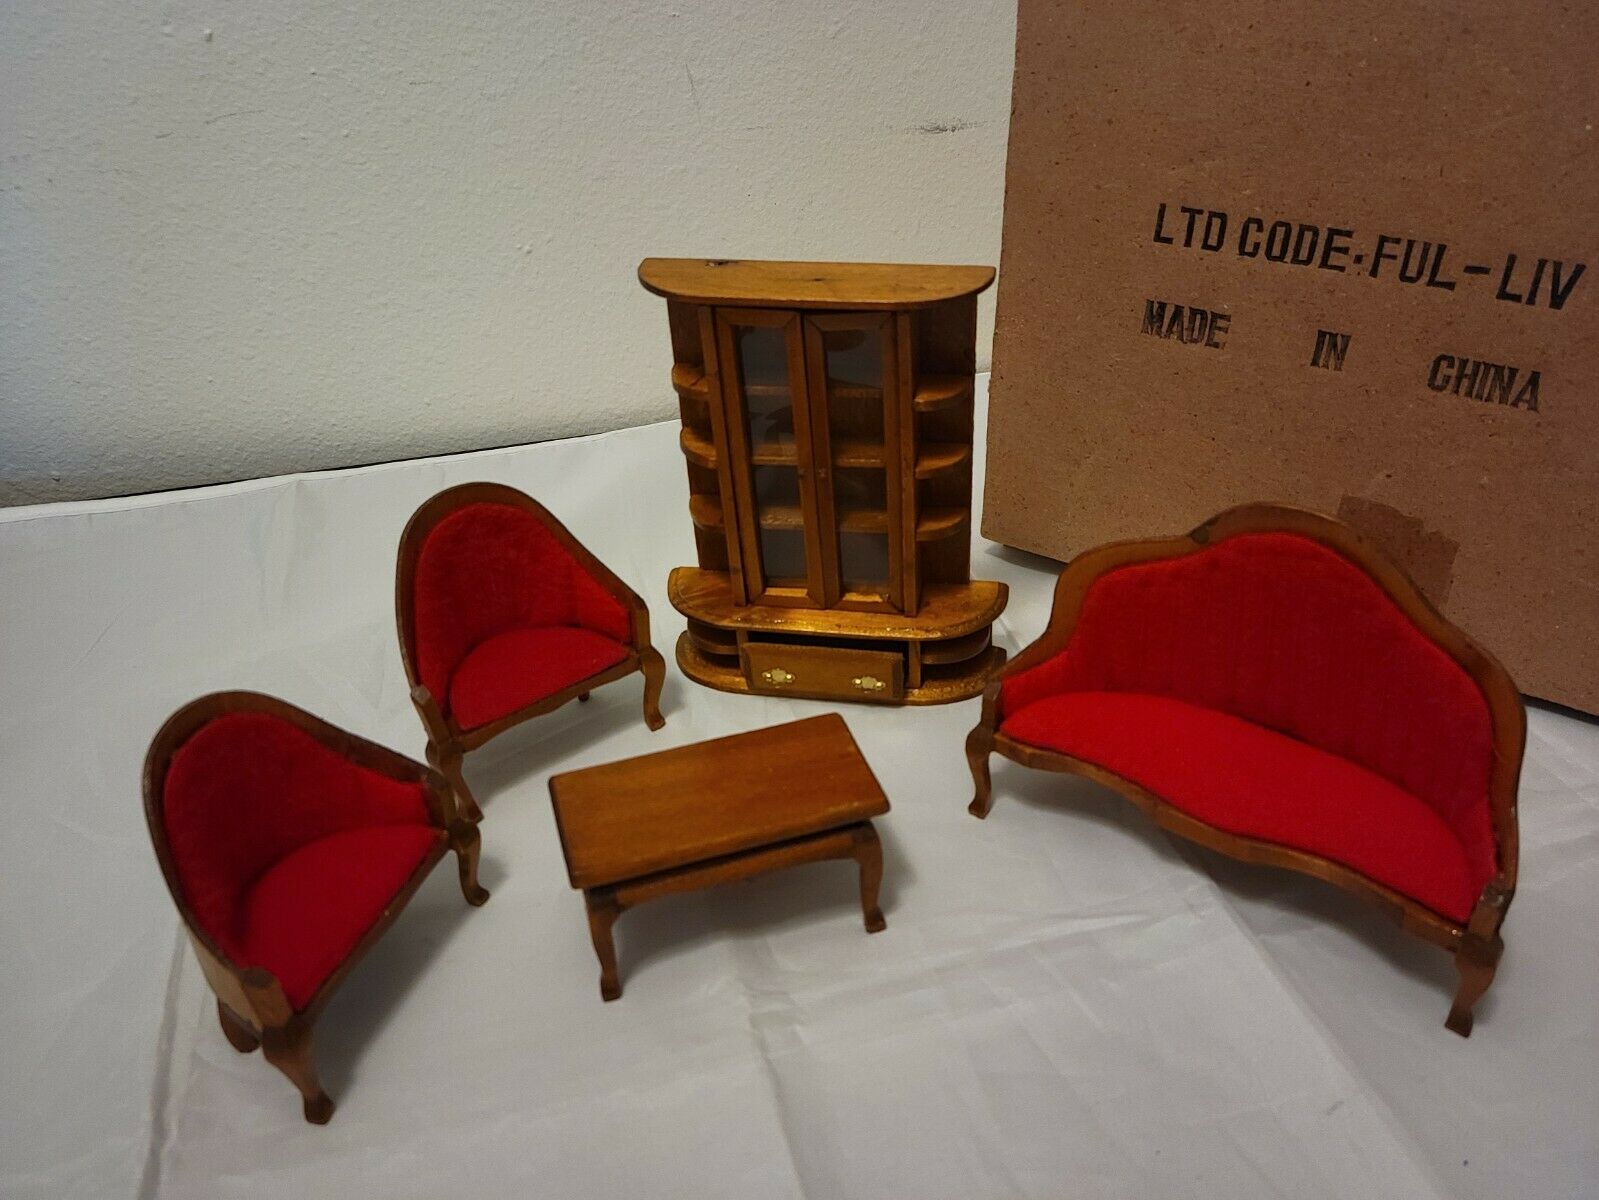 Miniature Wood Dollhouse Furniture - 5 Pc Living Room Set / Nib / Code Ful-liv